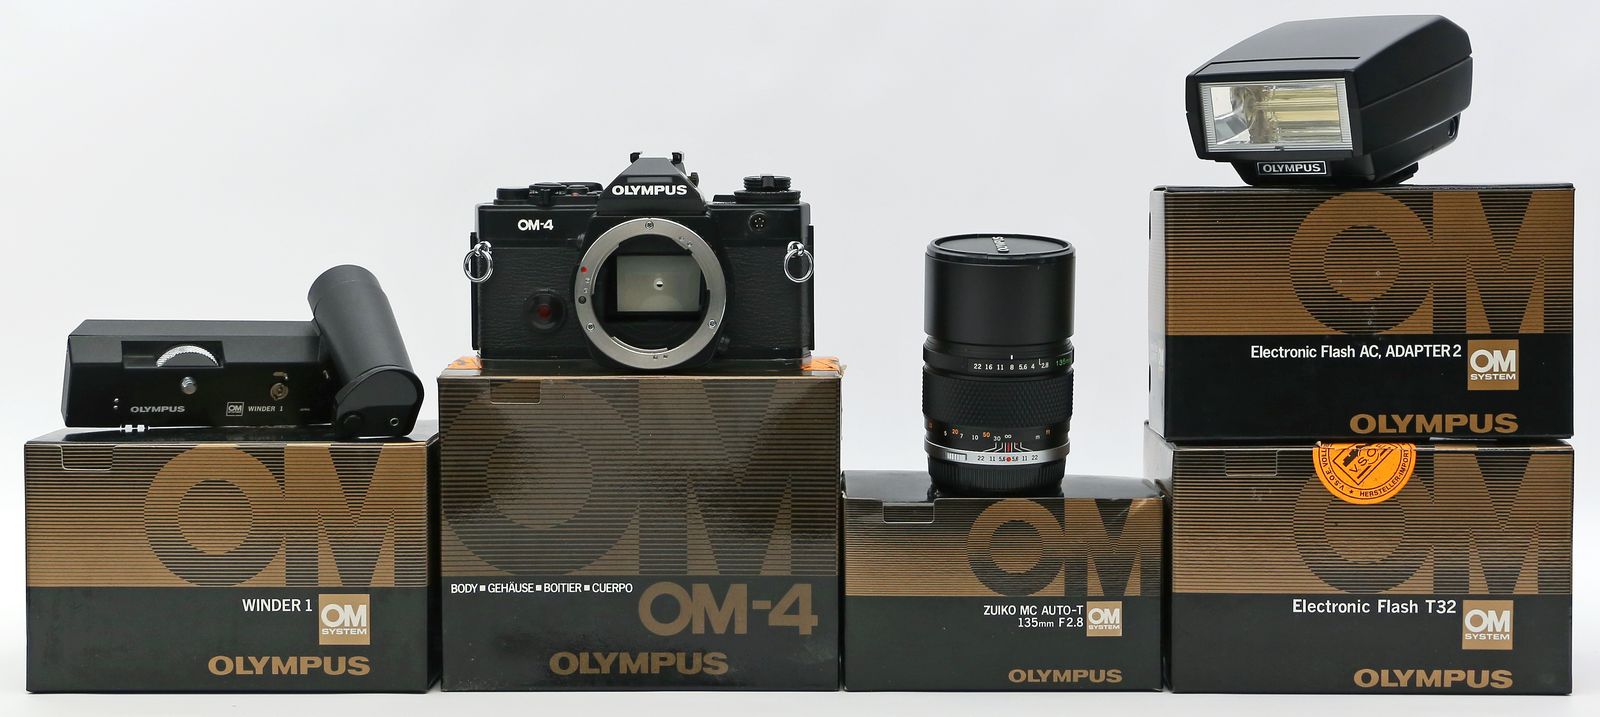 Spiegelreflexkamera "Olympus OM-4".